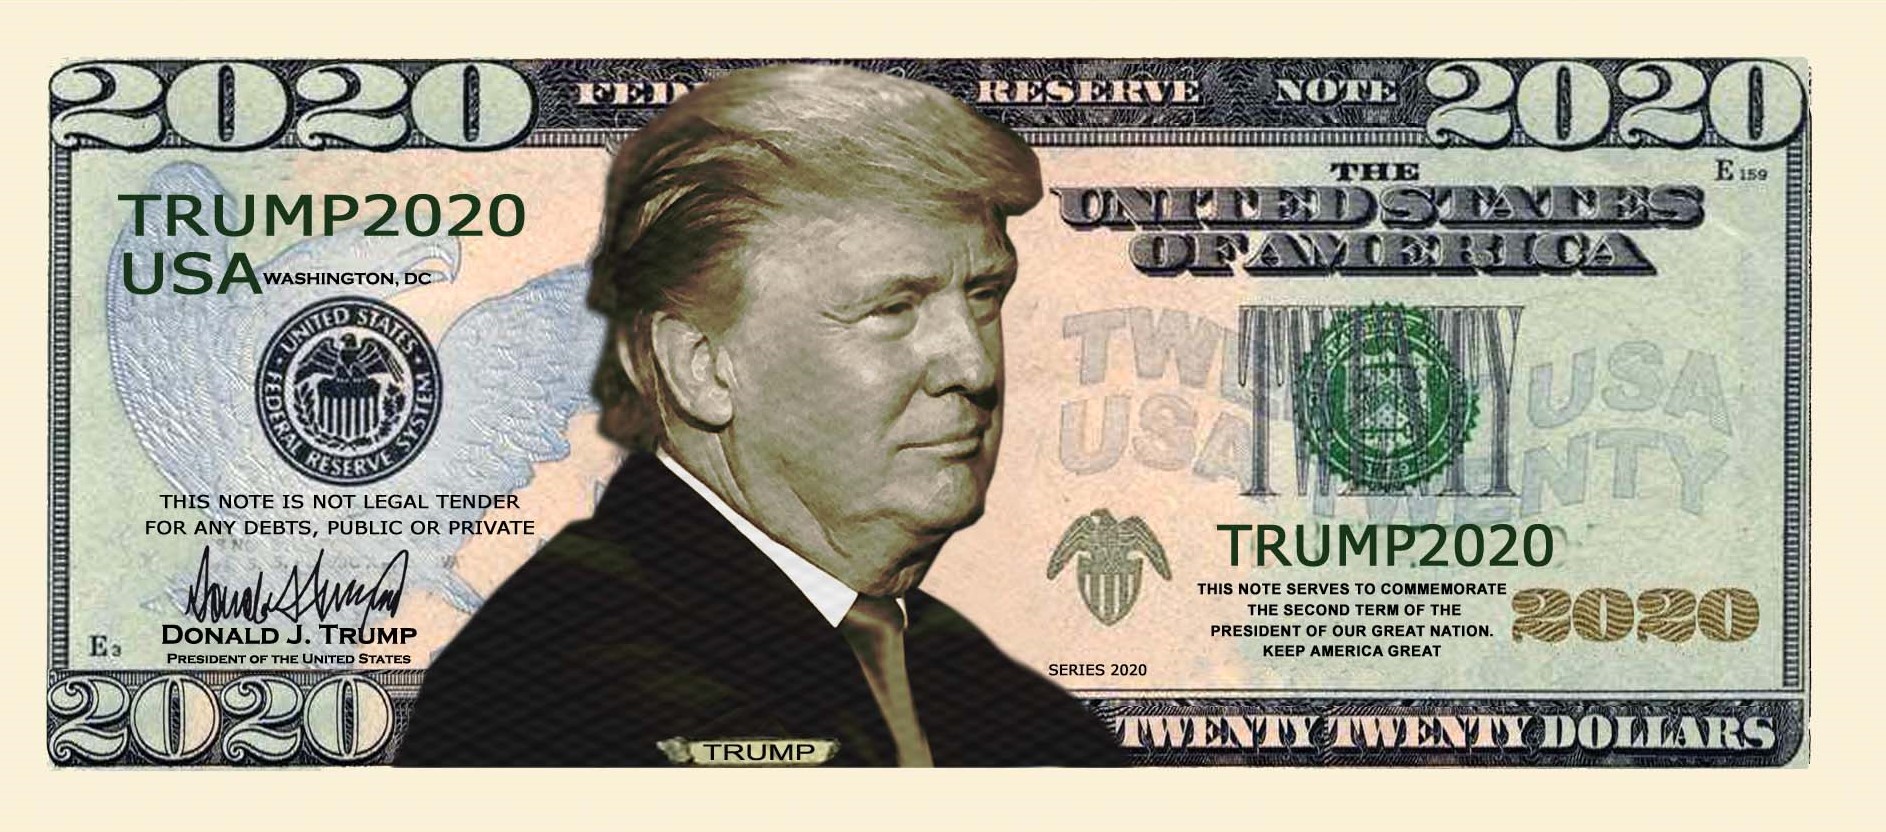 100pk  Trump Rushmore  2020 Dollar Bills  MAGA Novelty Funny Money Feels Real